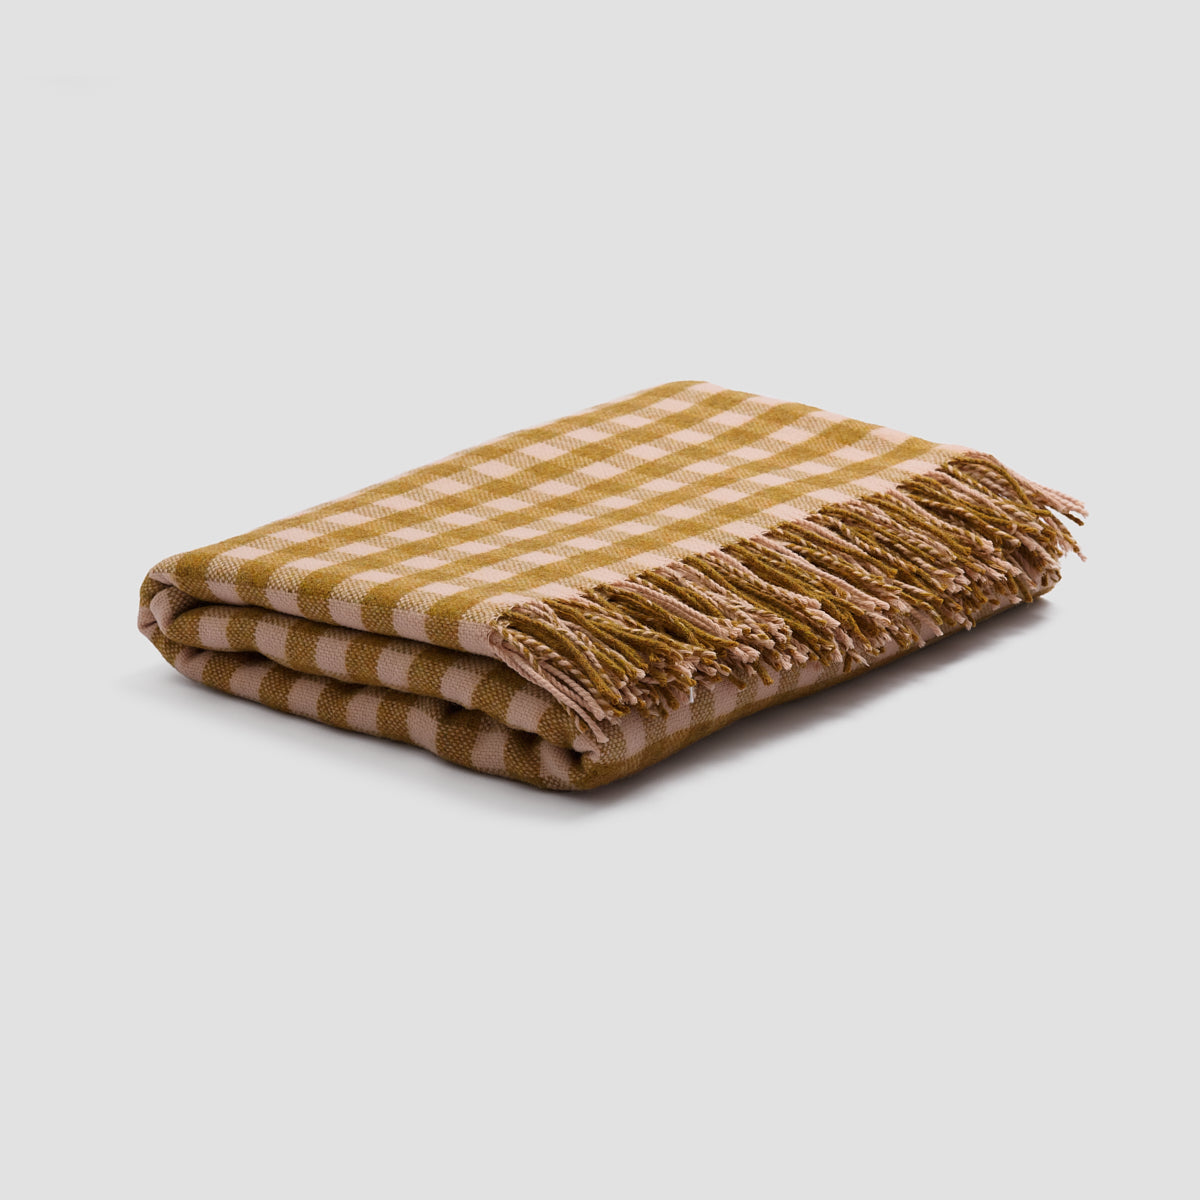 Ochre Gingham Wool Blanket - Piglet in Bed